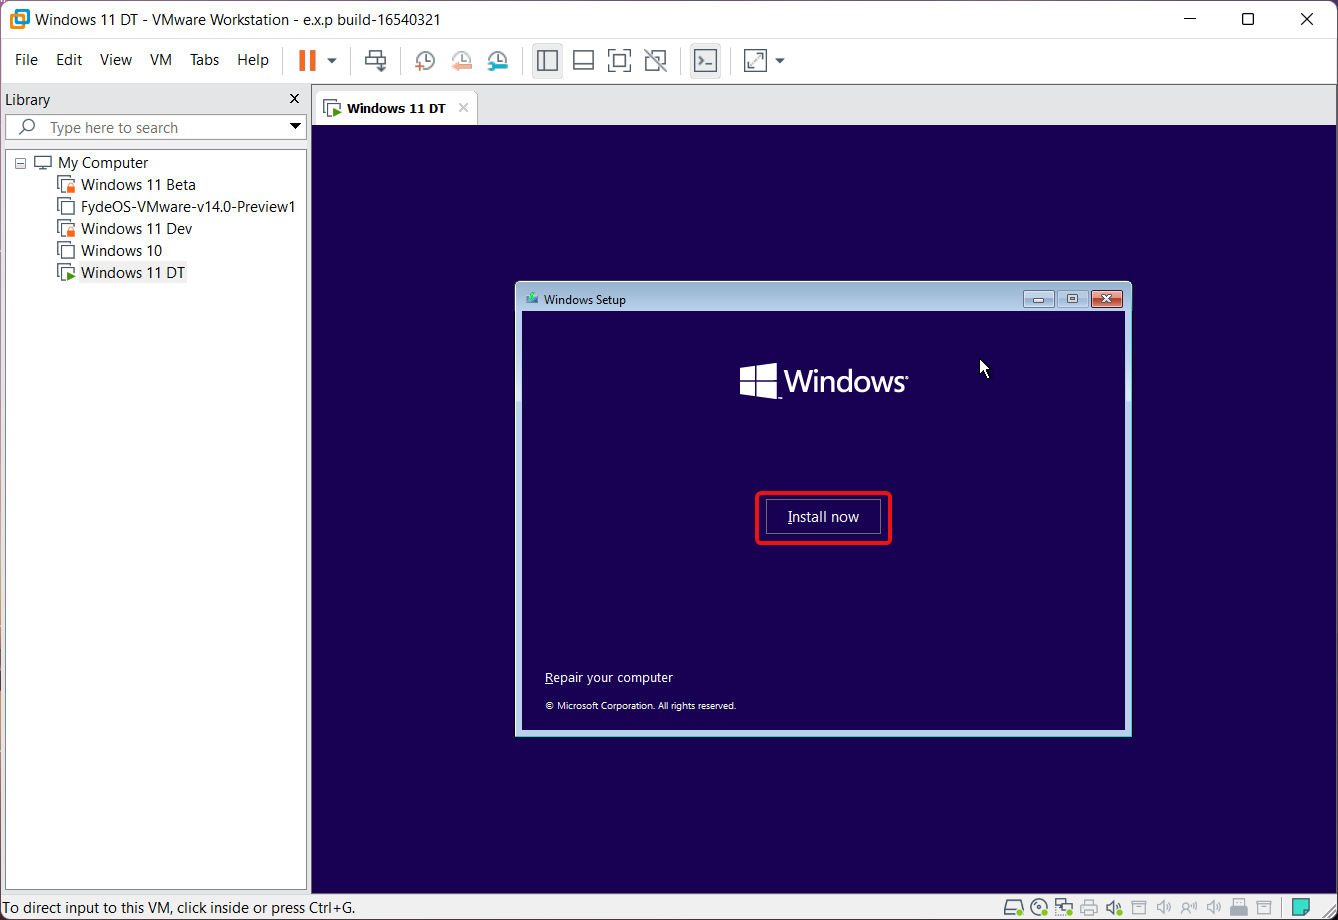 Windows 11 Install Now Menu